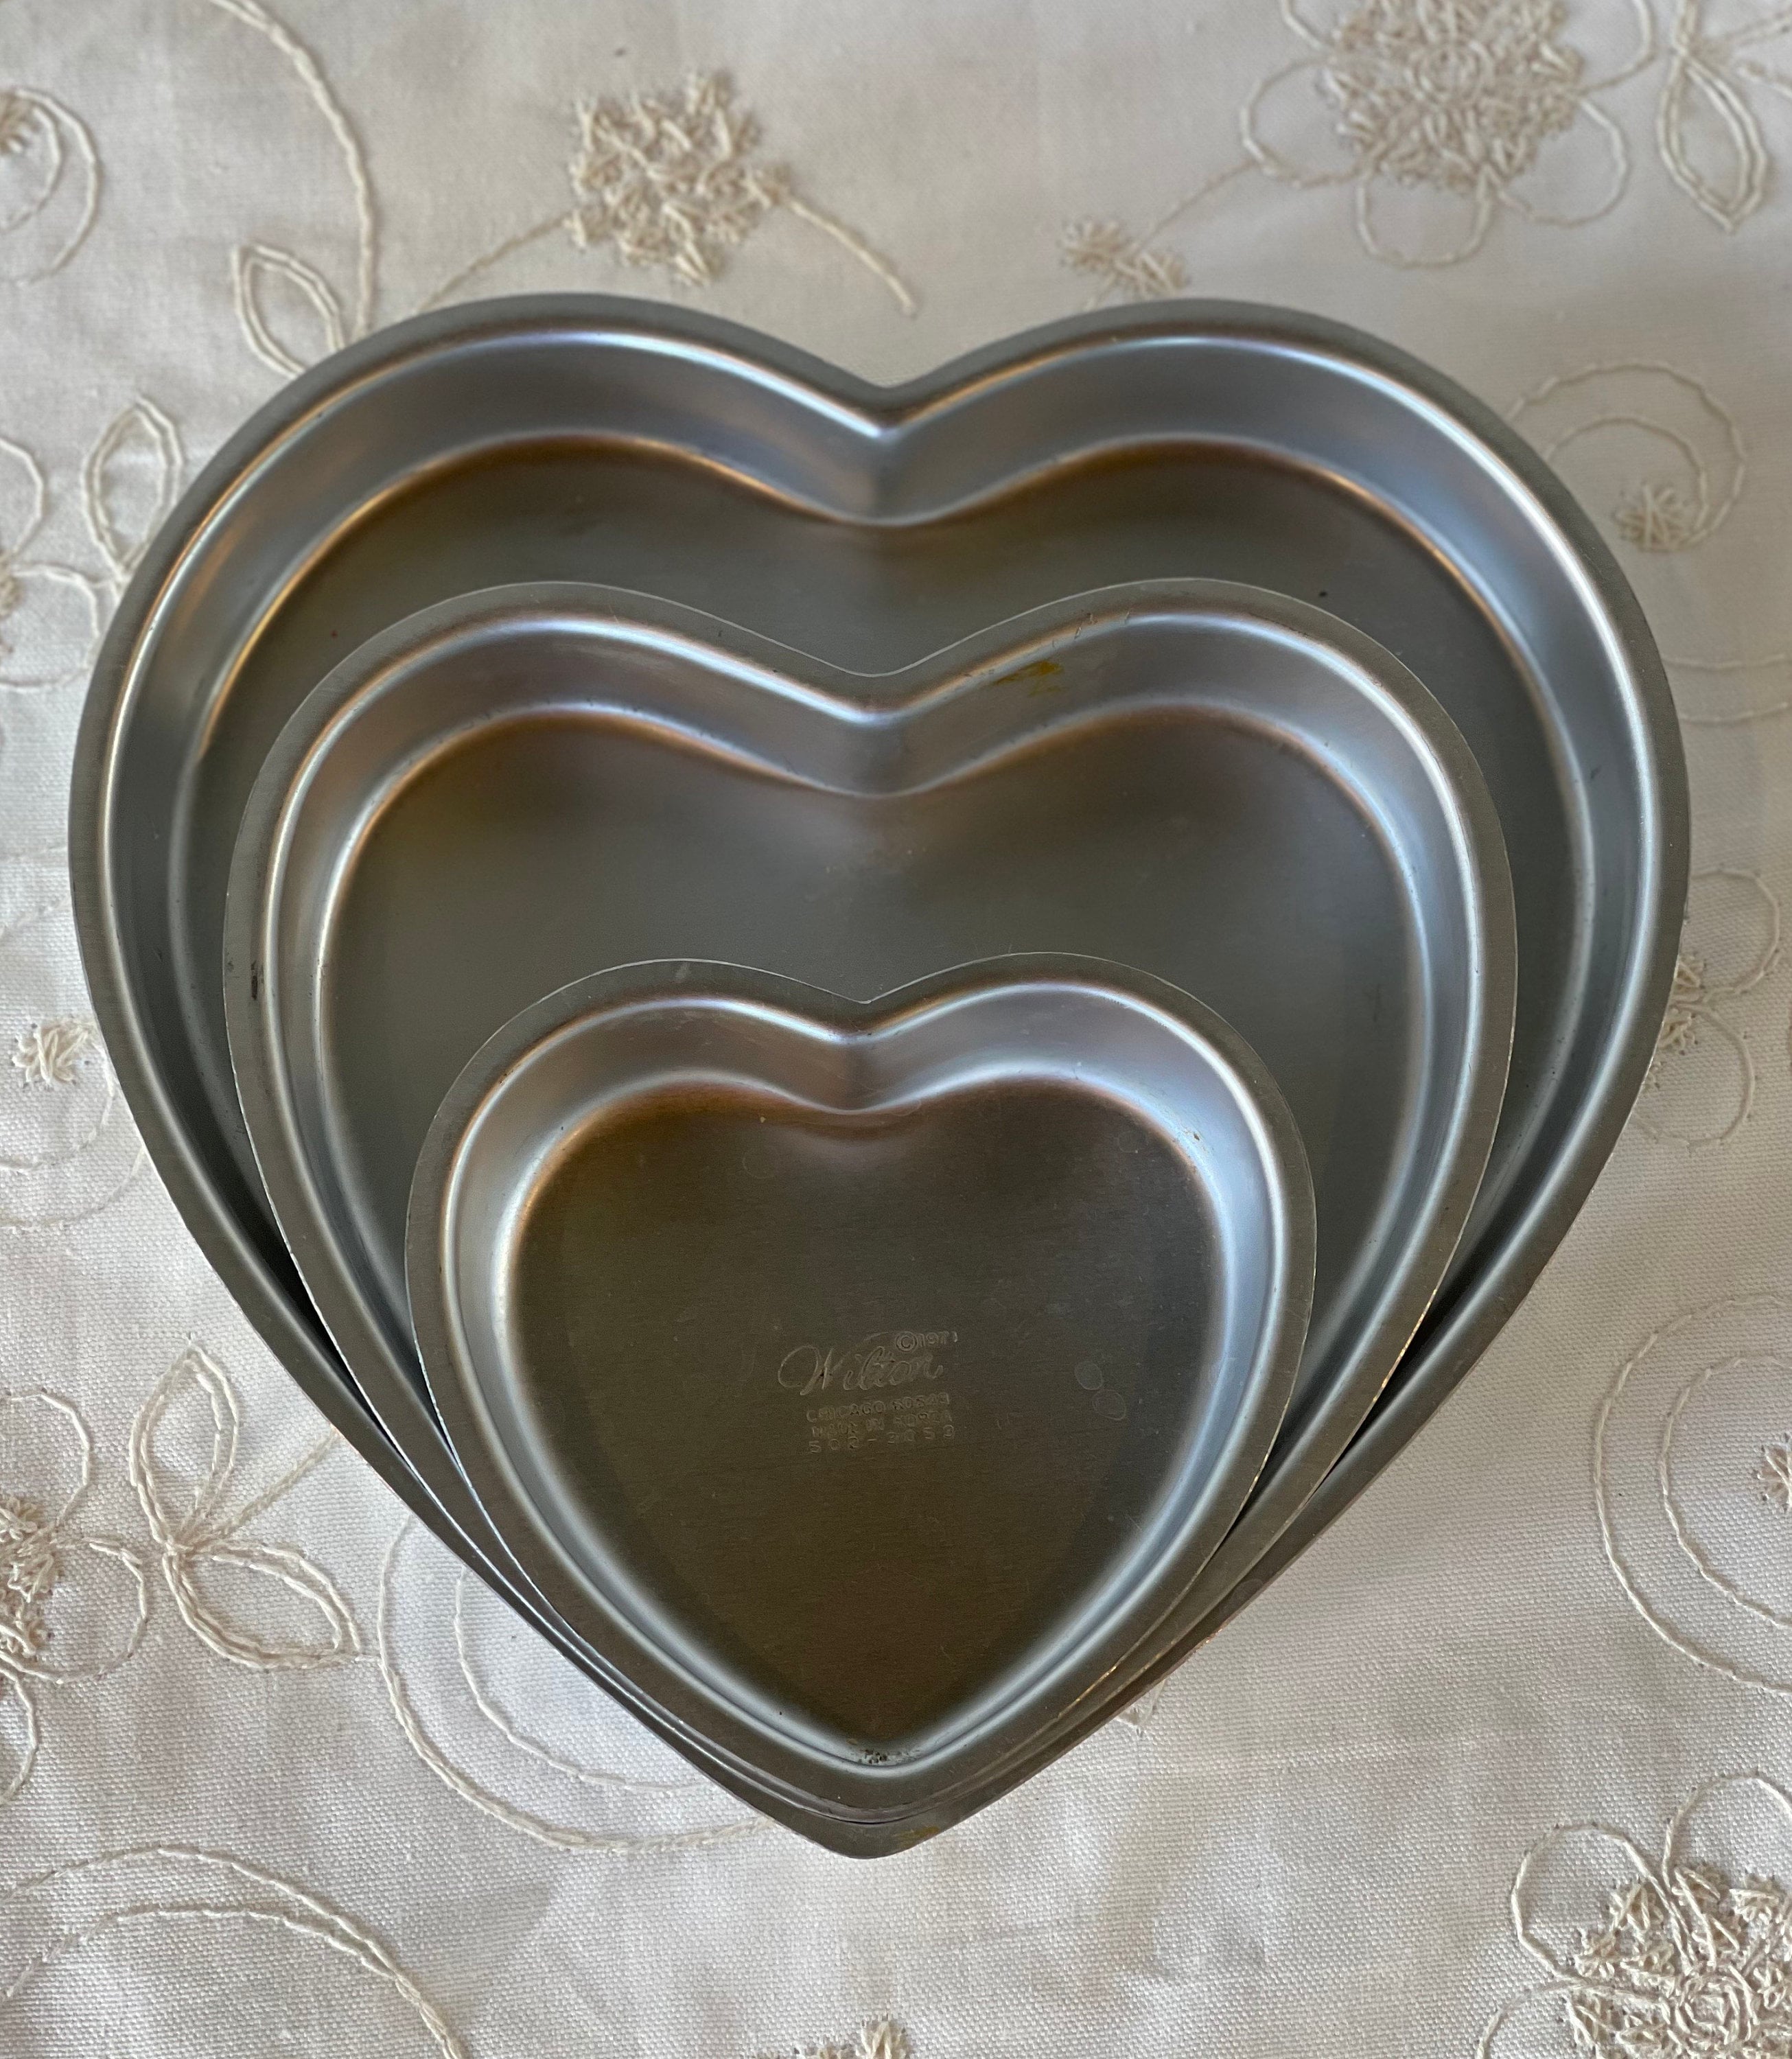 Wilton Heart Shaped Cake Pans Nesting Set of Heart Shaped 